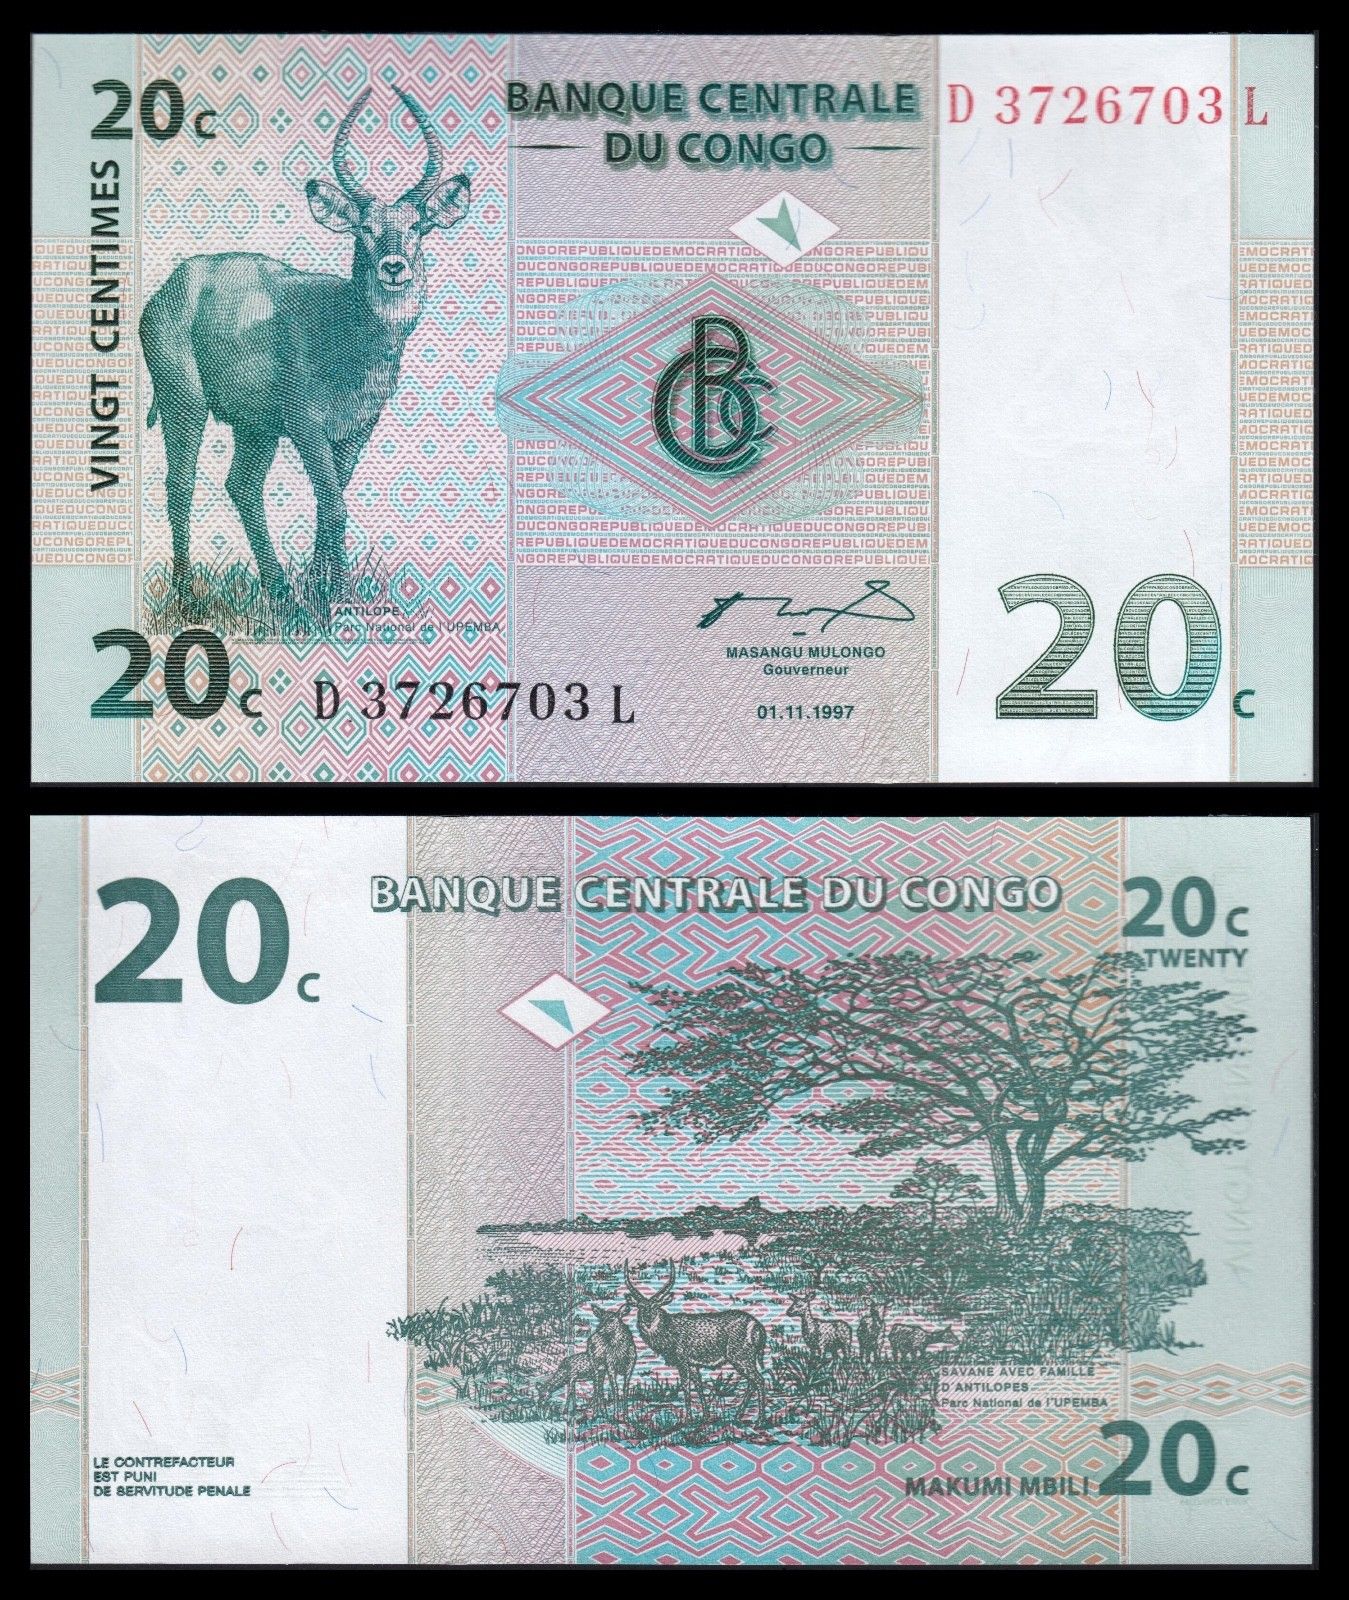 20 centimes Congo Democratic Republic 1997